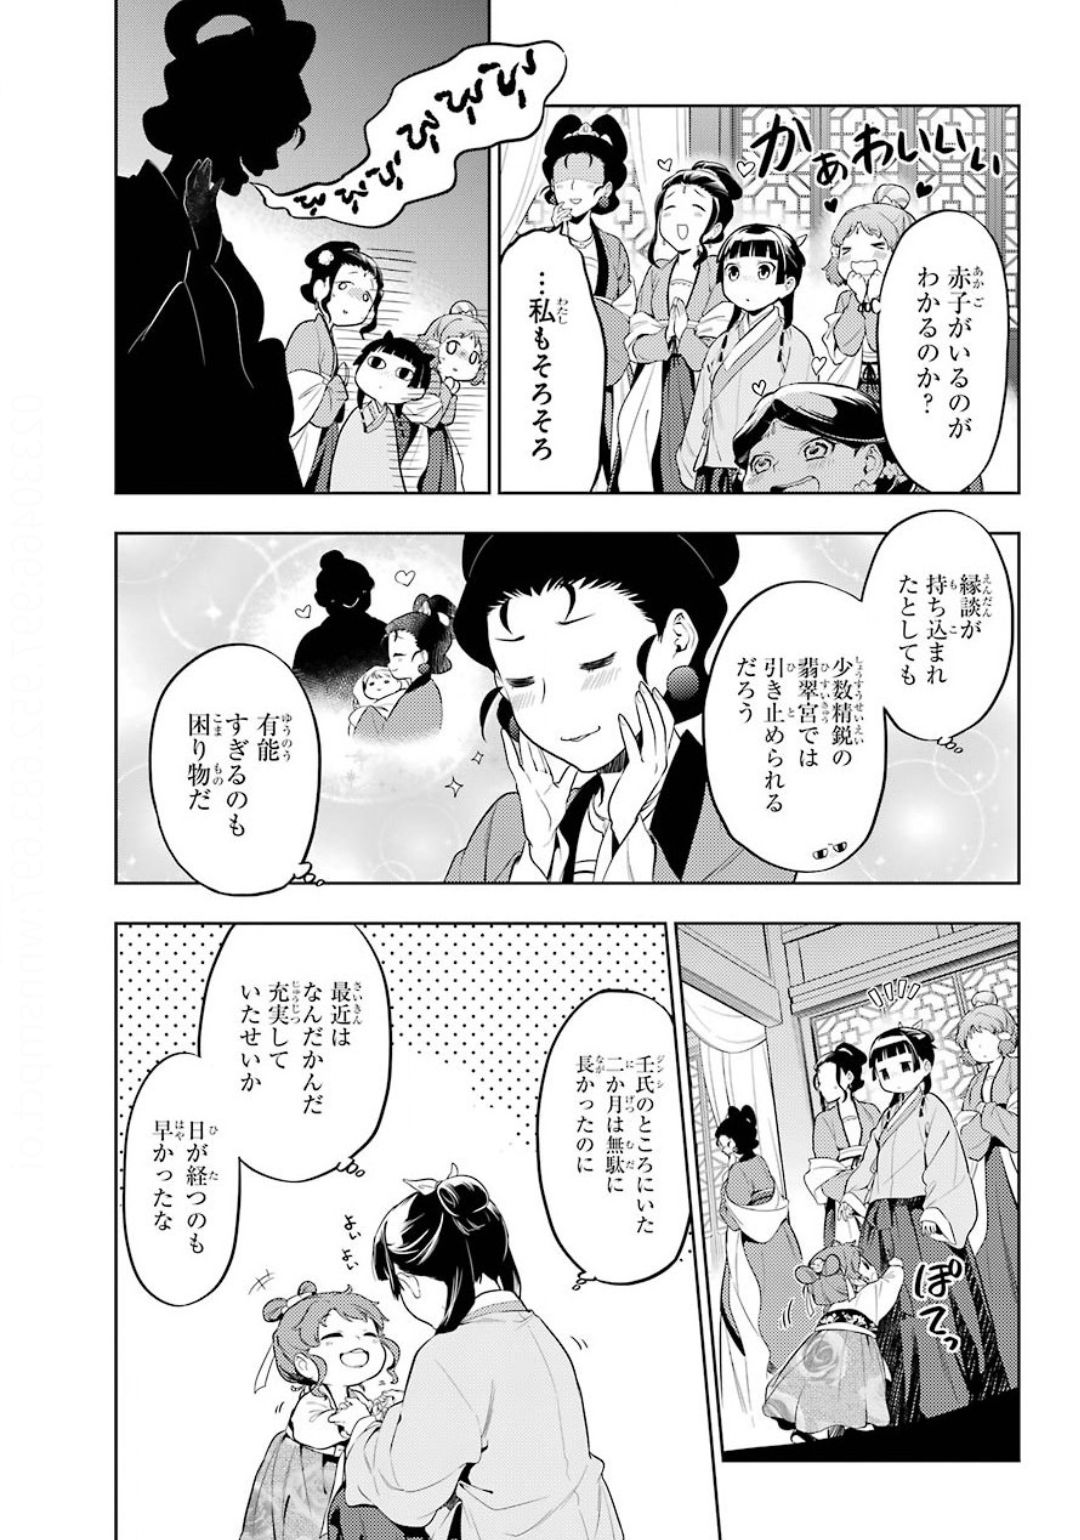 Kusuriya no Hitorigoto - Chapter 36.1 - Page 3